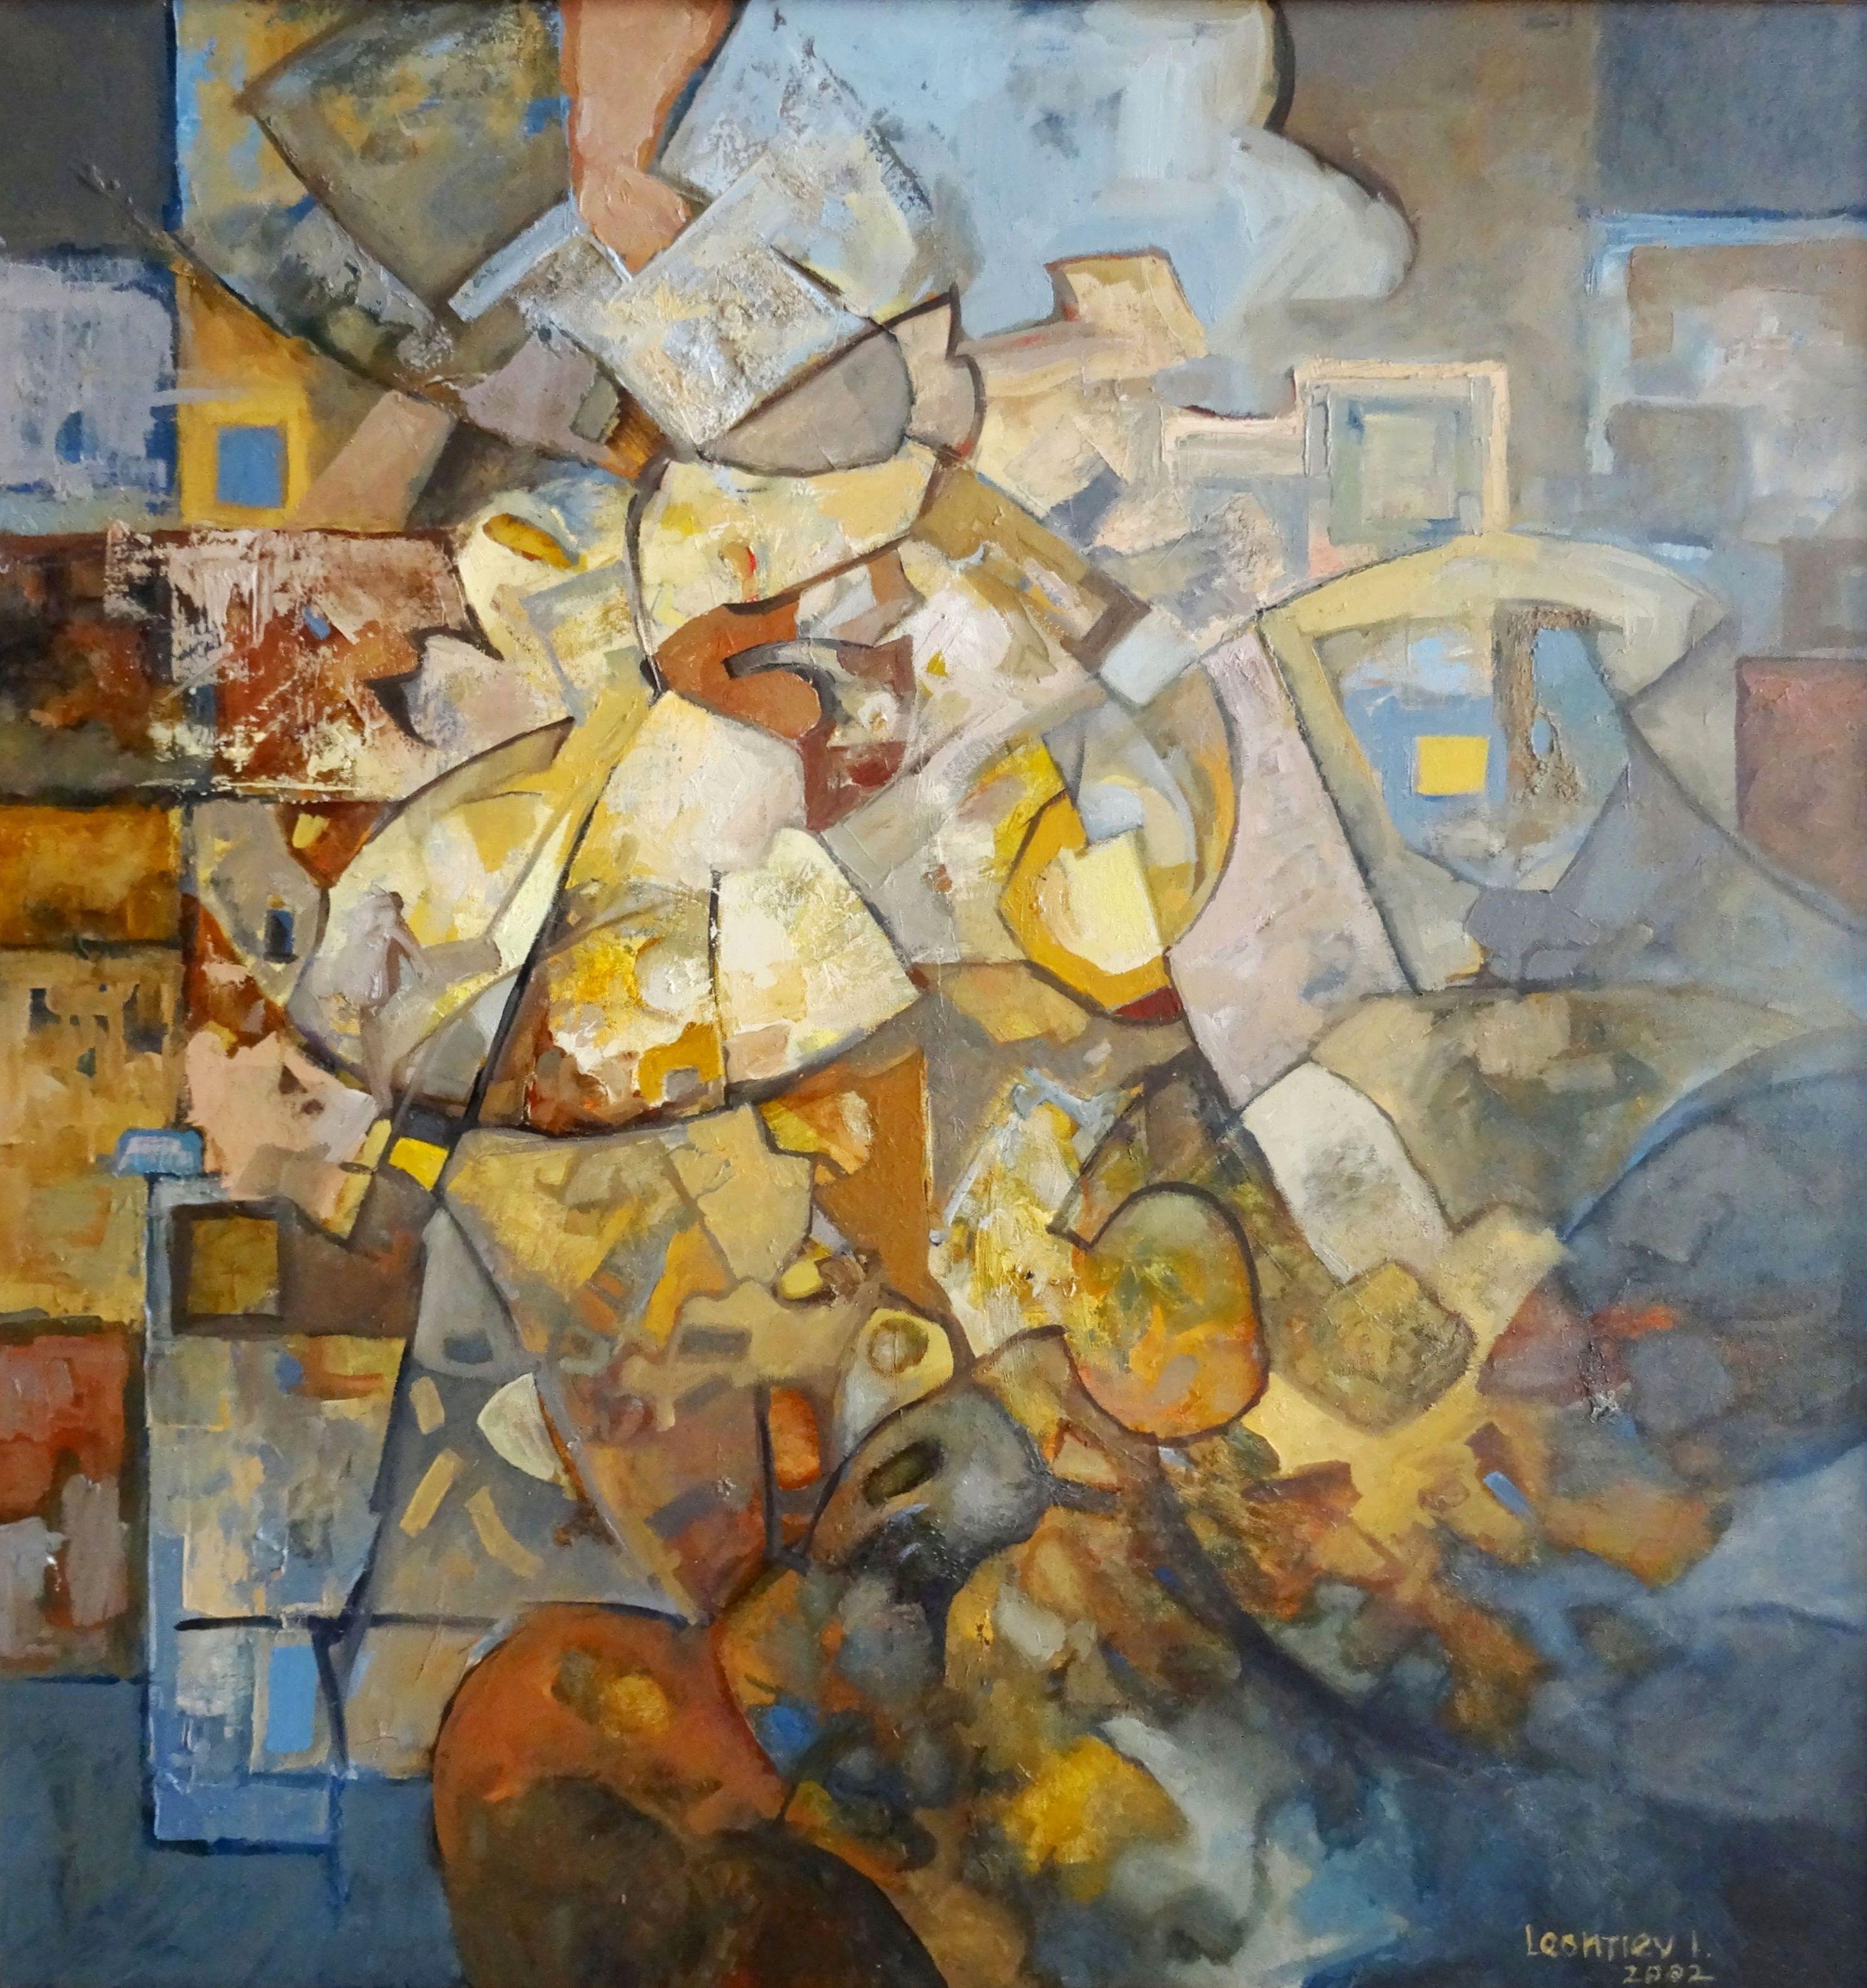  Pilz-Regen-Mantra. 2002, Öl auf Leinwand, 95,5 x 90,5 cm